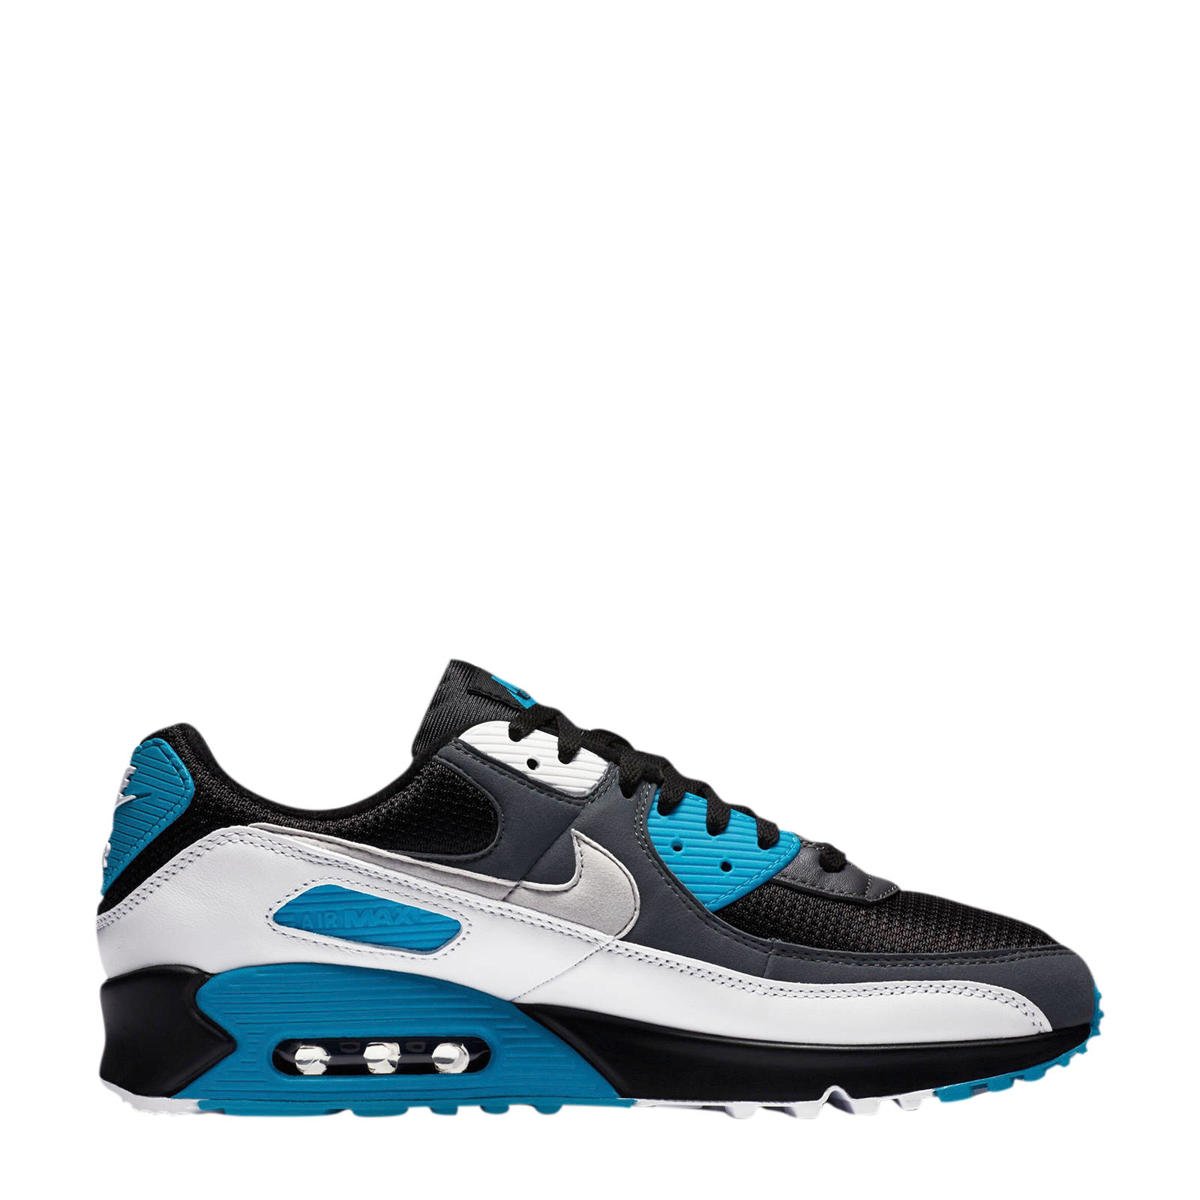 Bourgondië Verwant reservoir Nike Air Max 90 sneakers zwart/grijs/blauw/wit | wehkamp